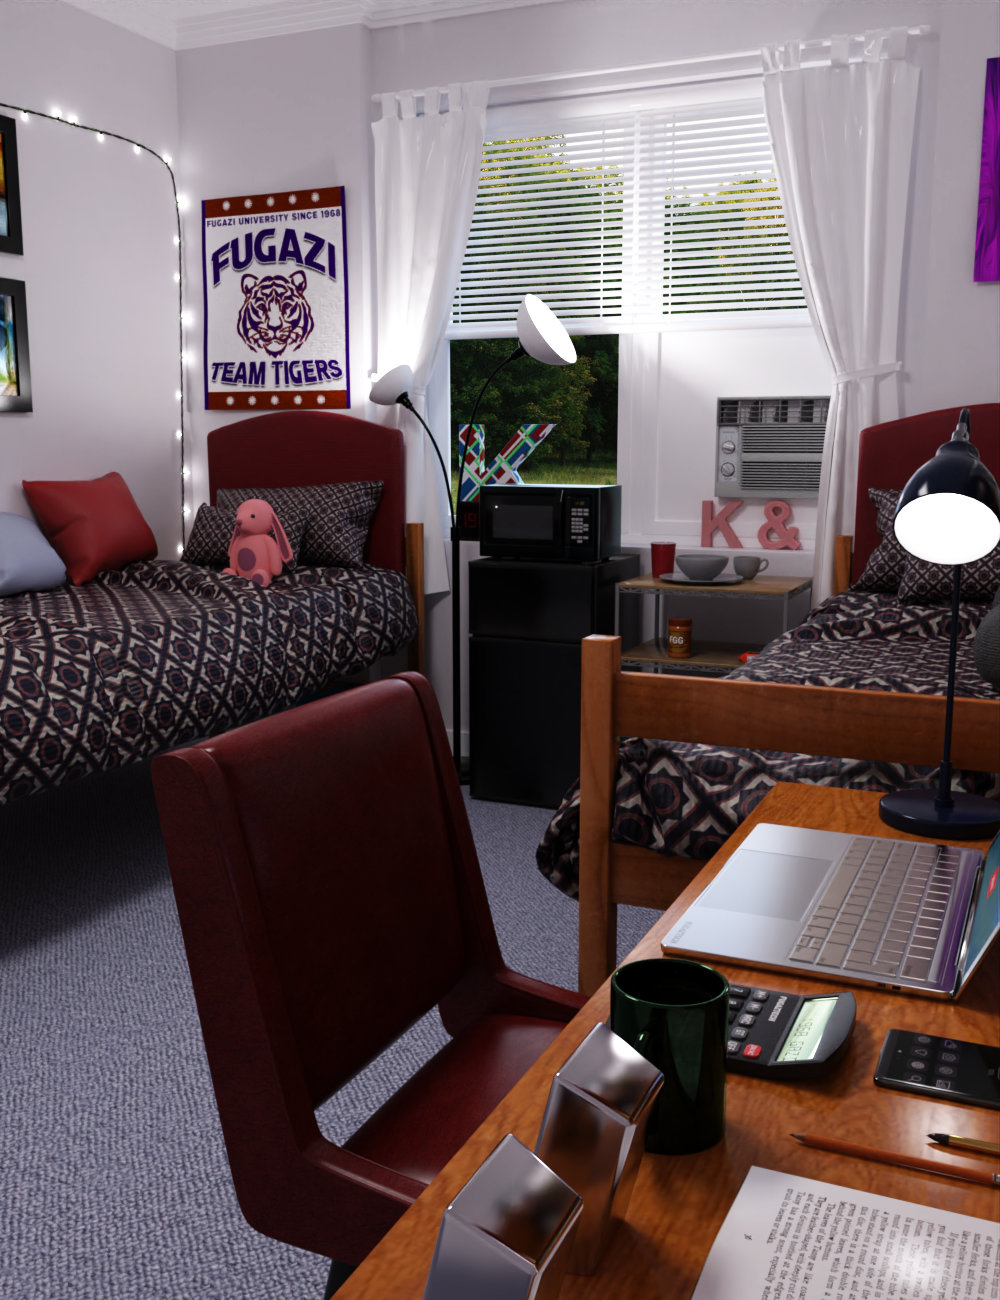 FG College Dorm Floor by: IronmanFugazi1968, 3D Models by Daz 3D